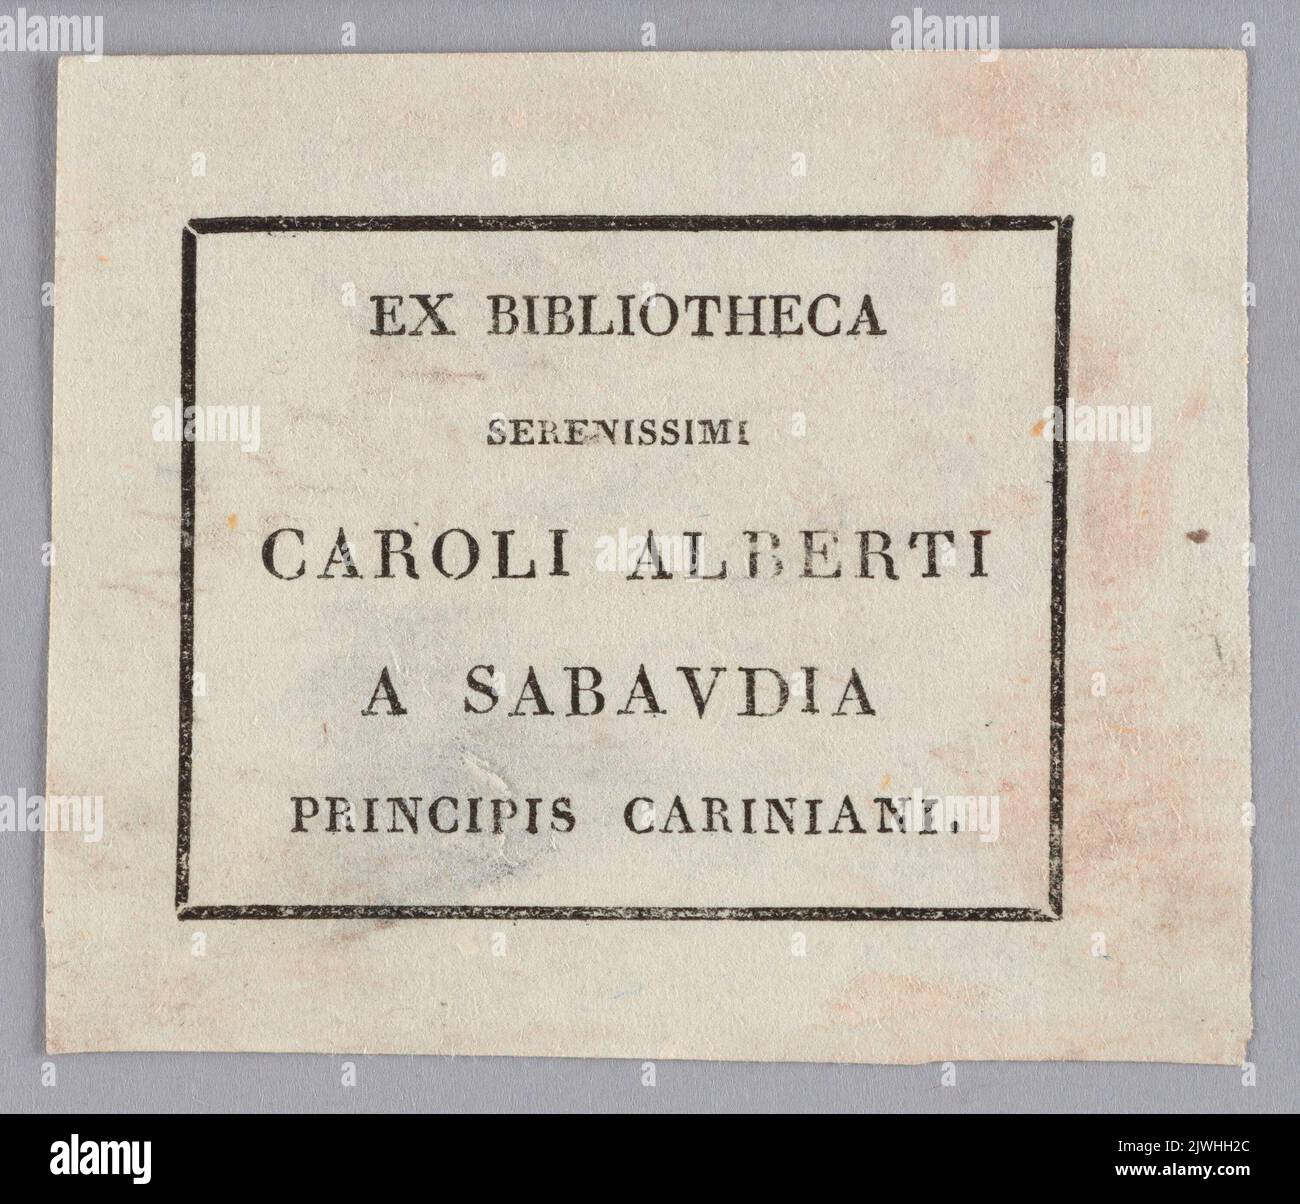 Ex Bibliotheca Serenissimi Caroli Alberti a Sabaudia Principis Cariniani. unknown, printer Stock Photo